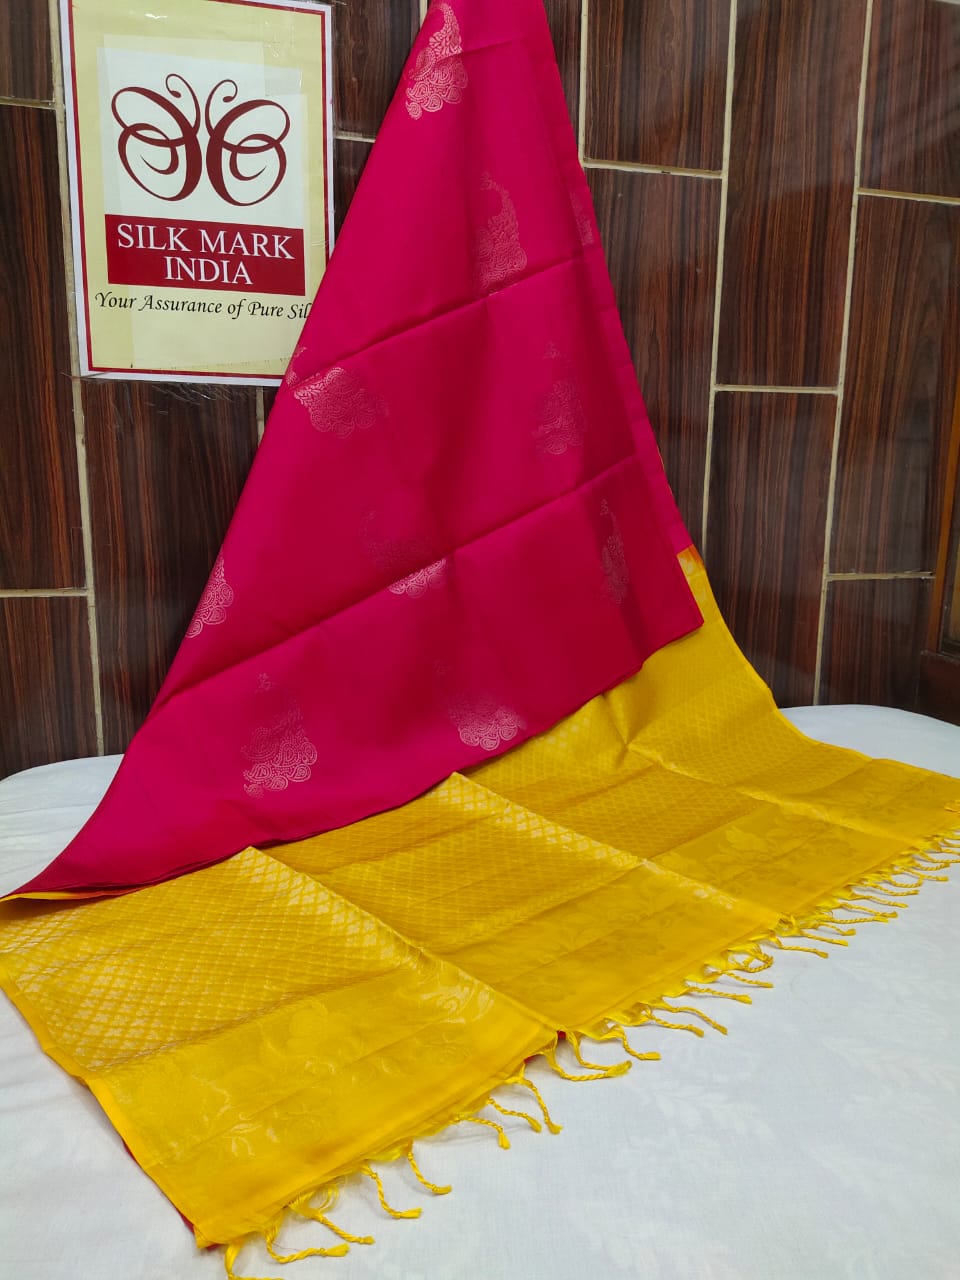 Red and Yellow Kanchipuram soft silk saree - borderless saree - silk mark certified